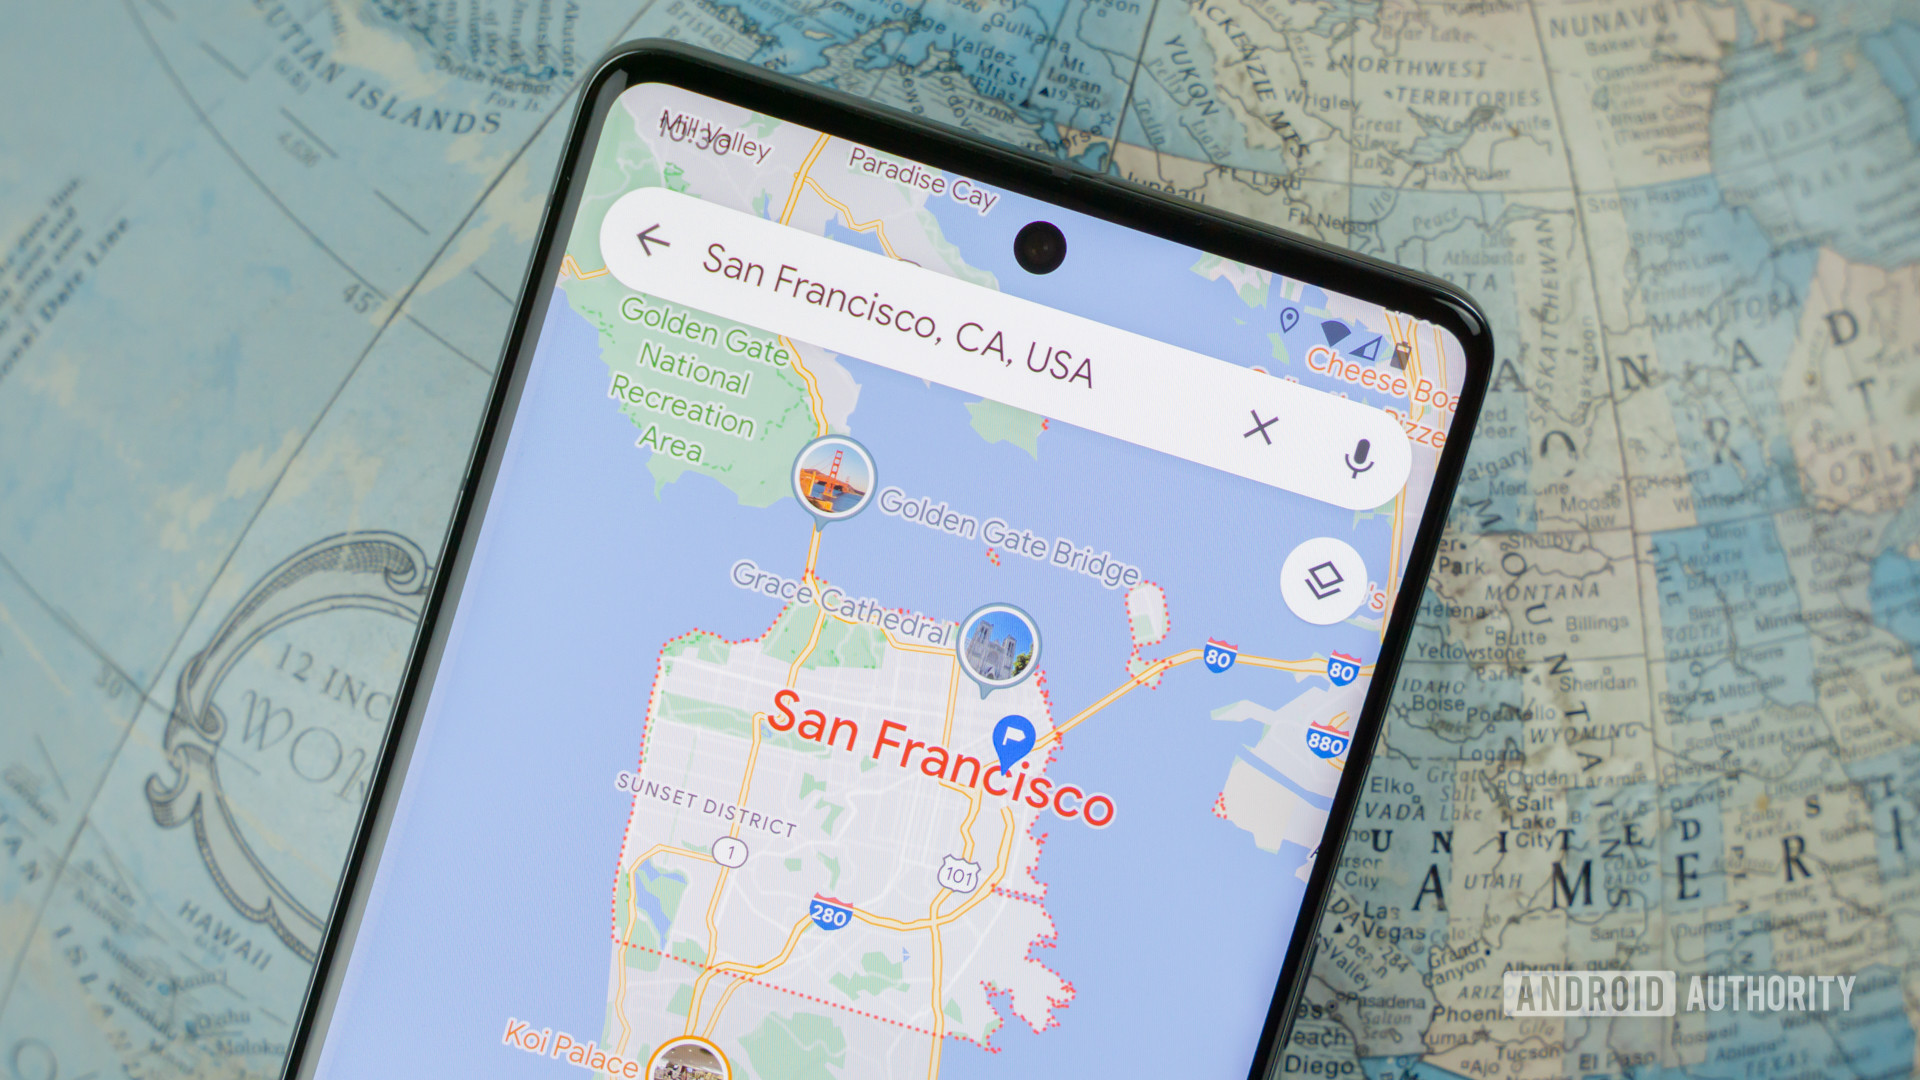 Microsoft, Amazon, and Meta team up to challenge Google Maps and Apple Maps